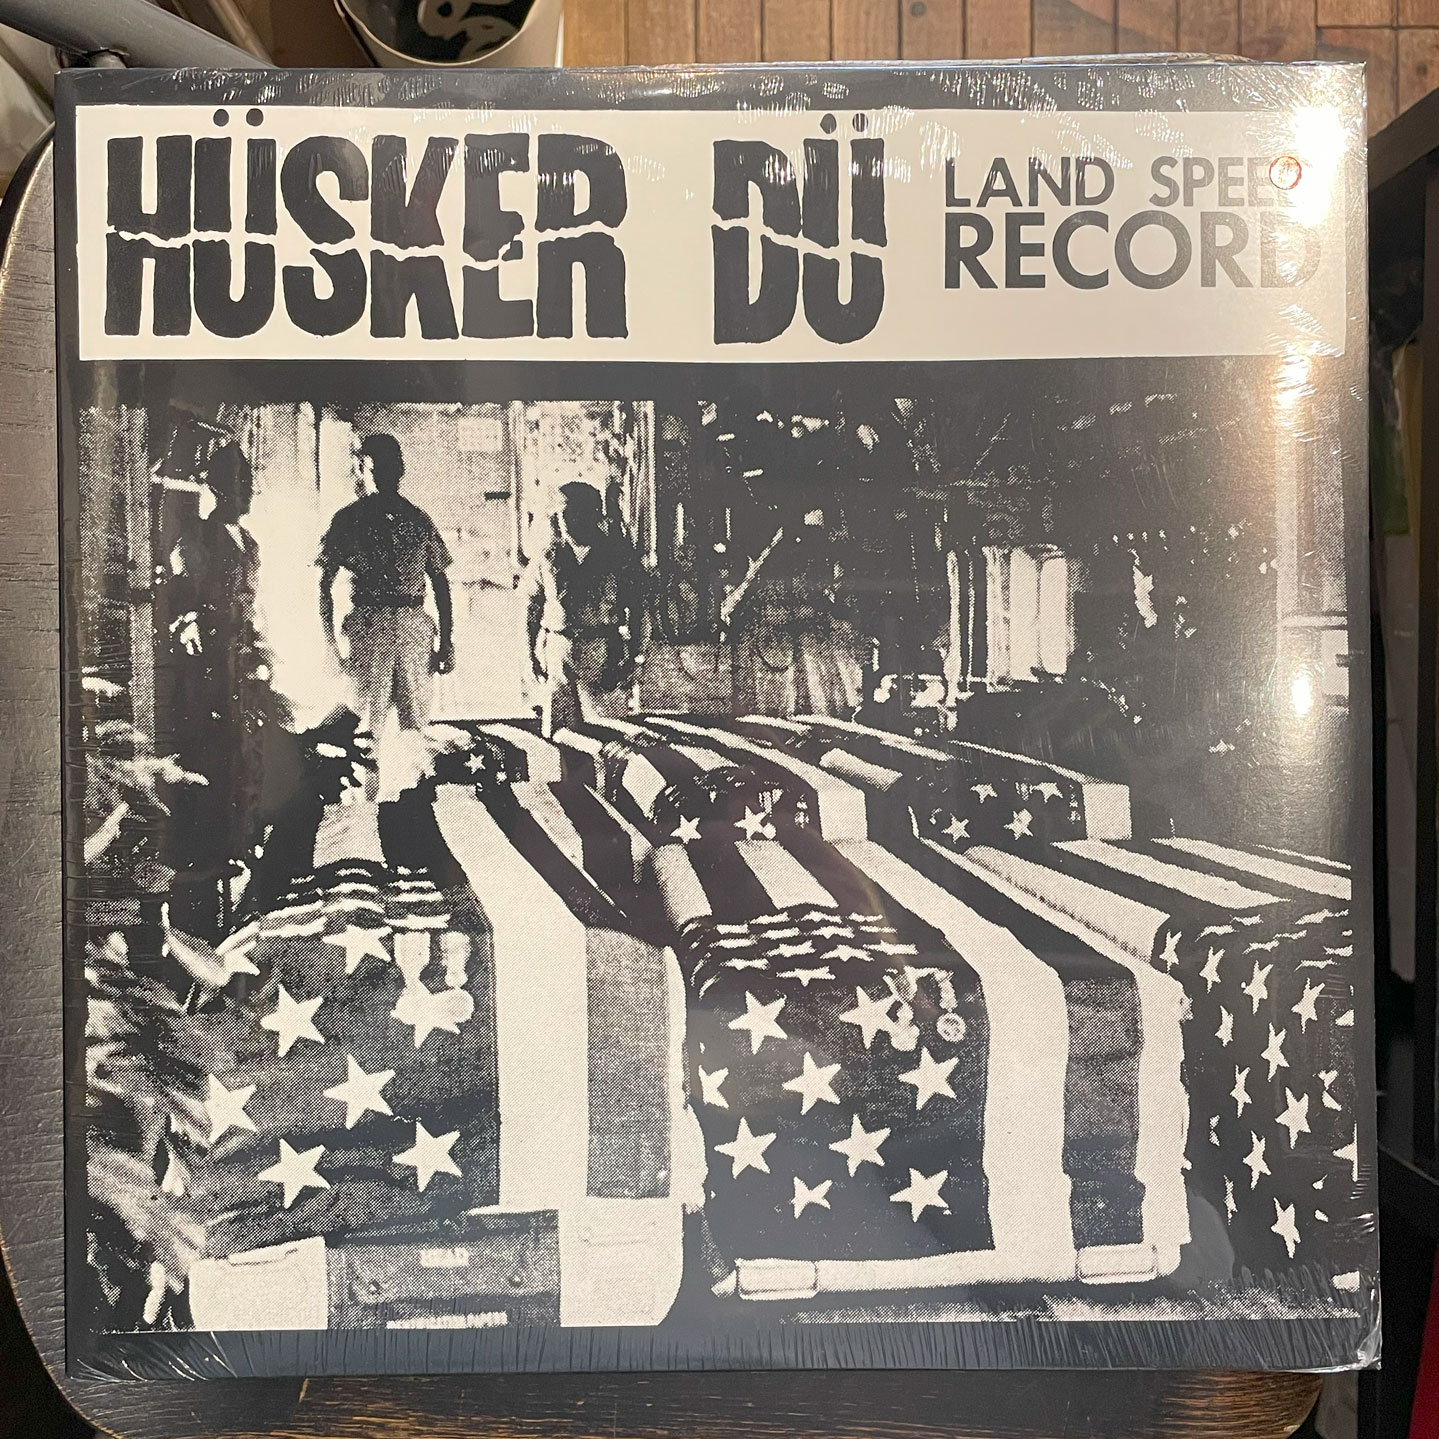 HUSKER DU 12" LP Land Speed Record